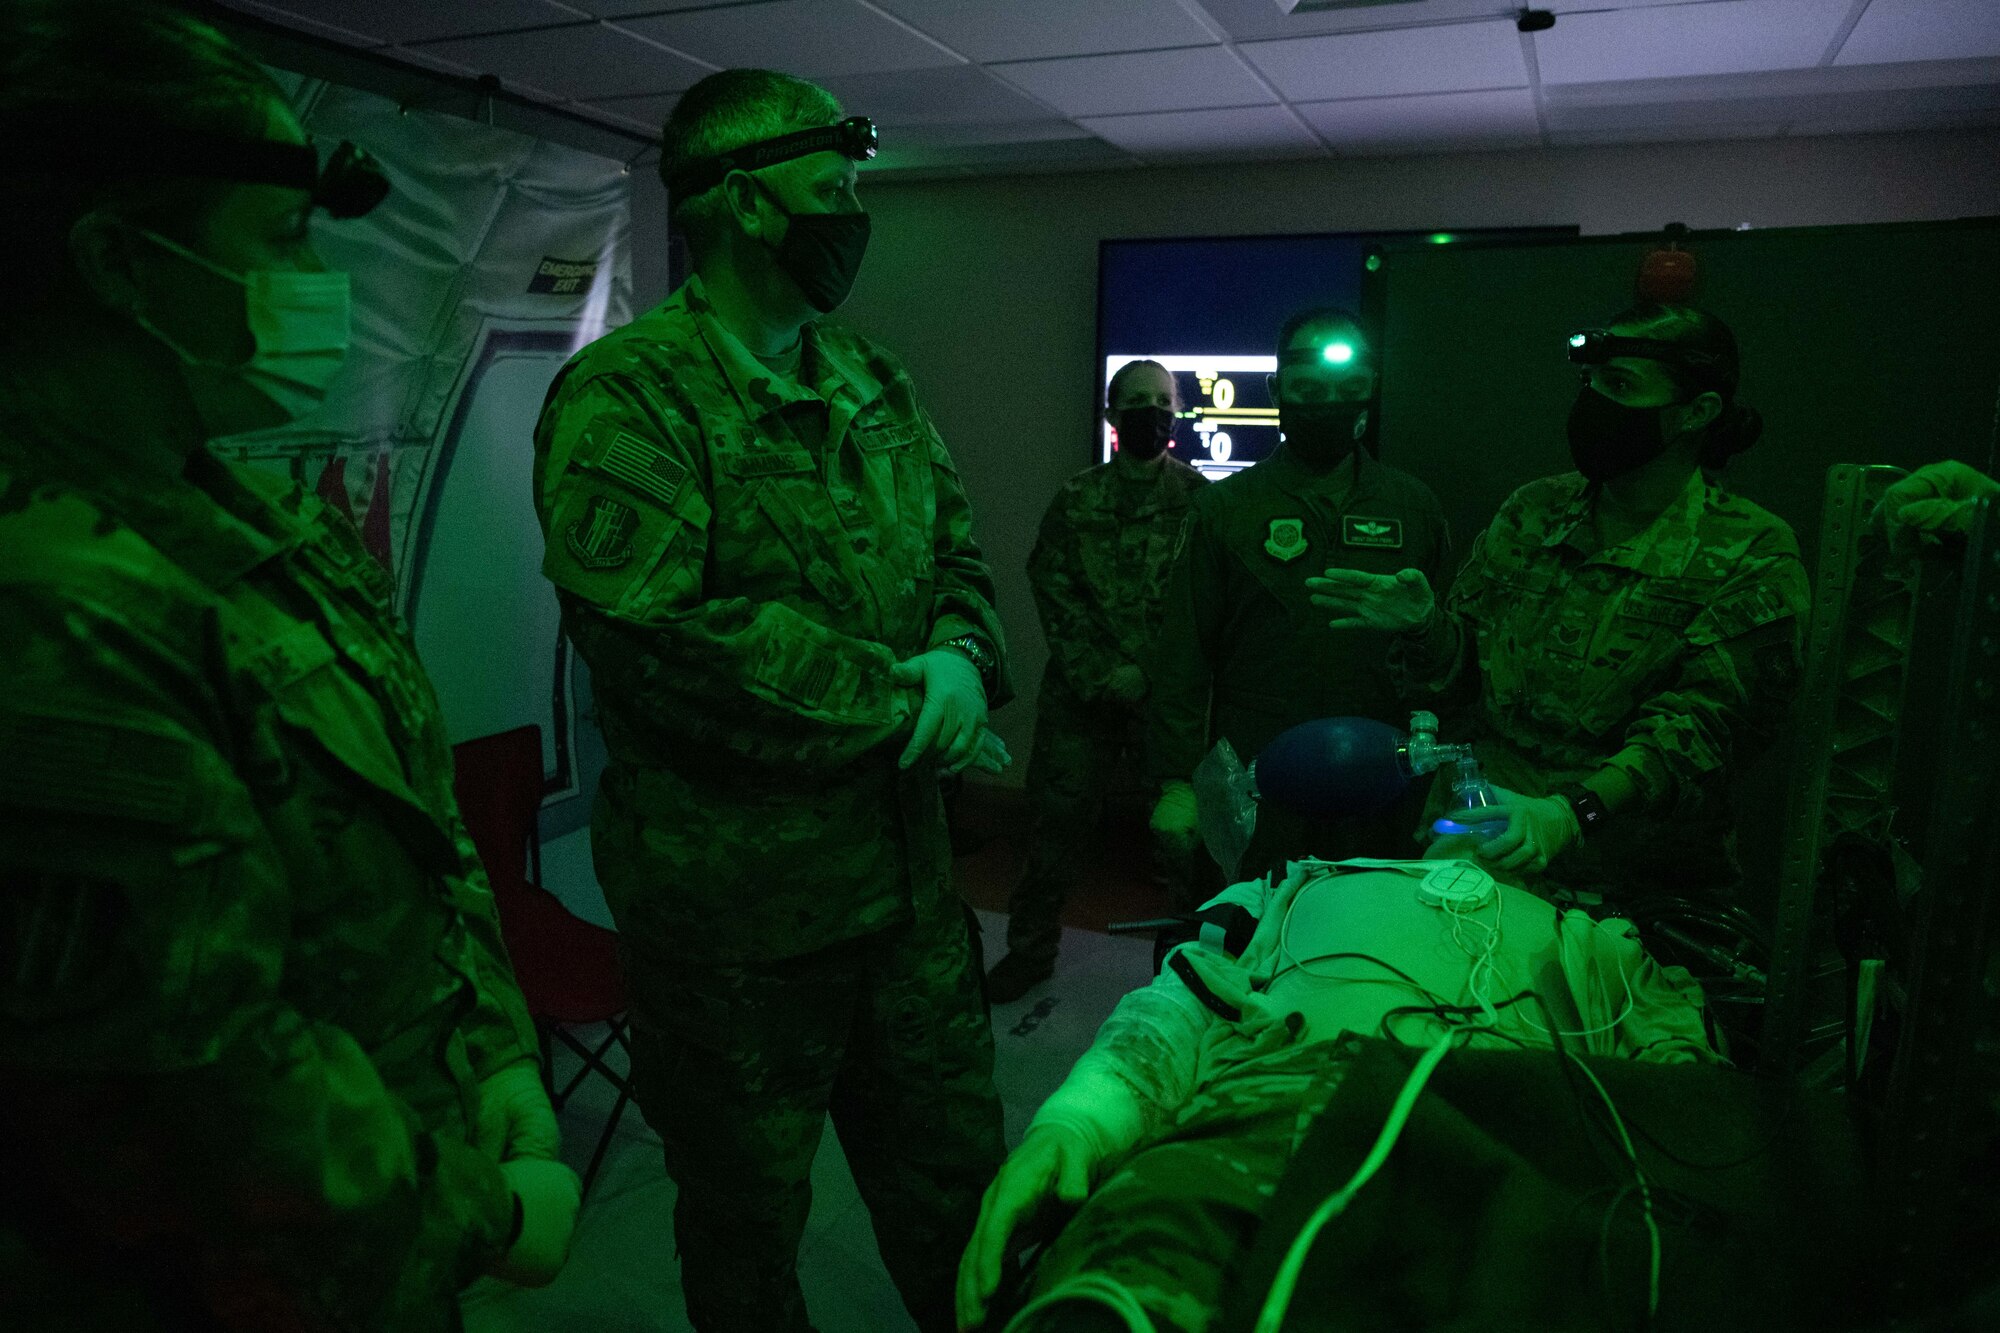 Airmen training in an aeromedical evacuation simulator room